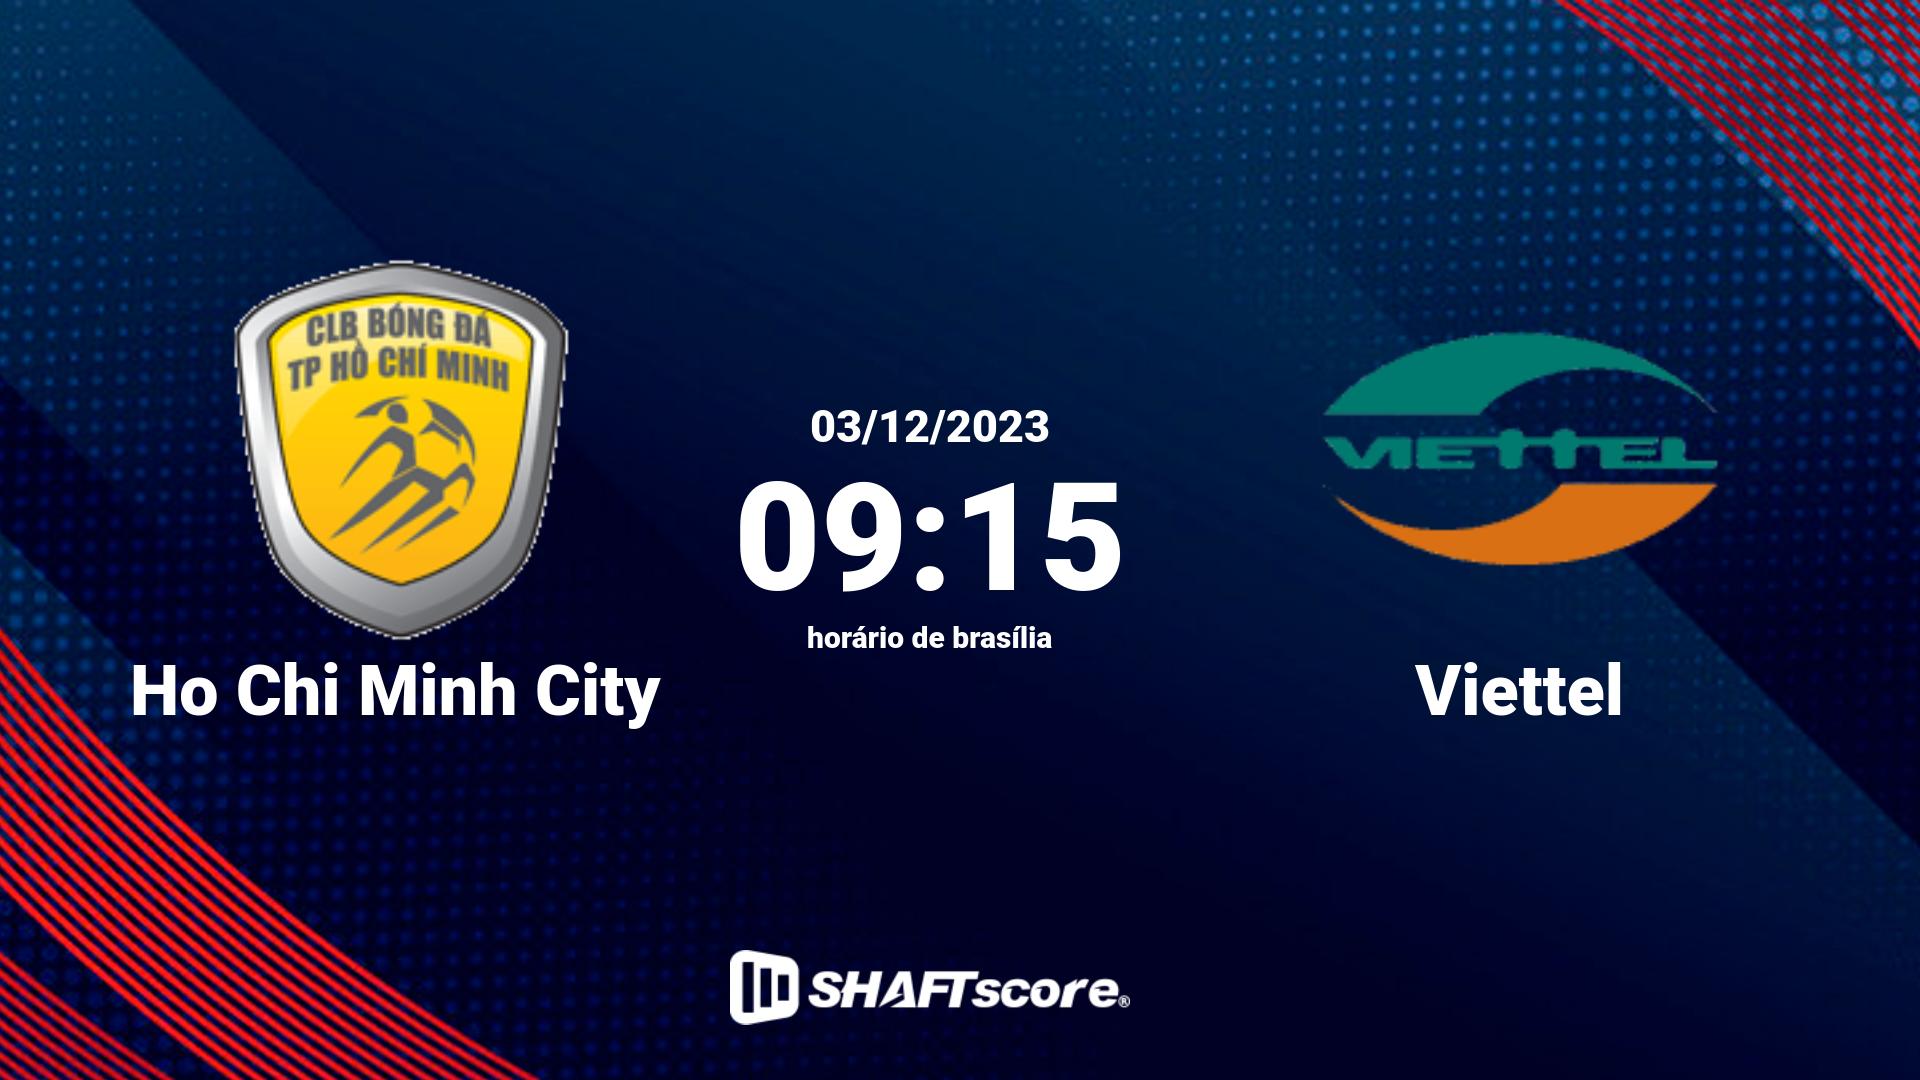 Estatísticas do jogo Ho Chi Minh City vs Viettel 03.12 09:15